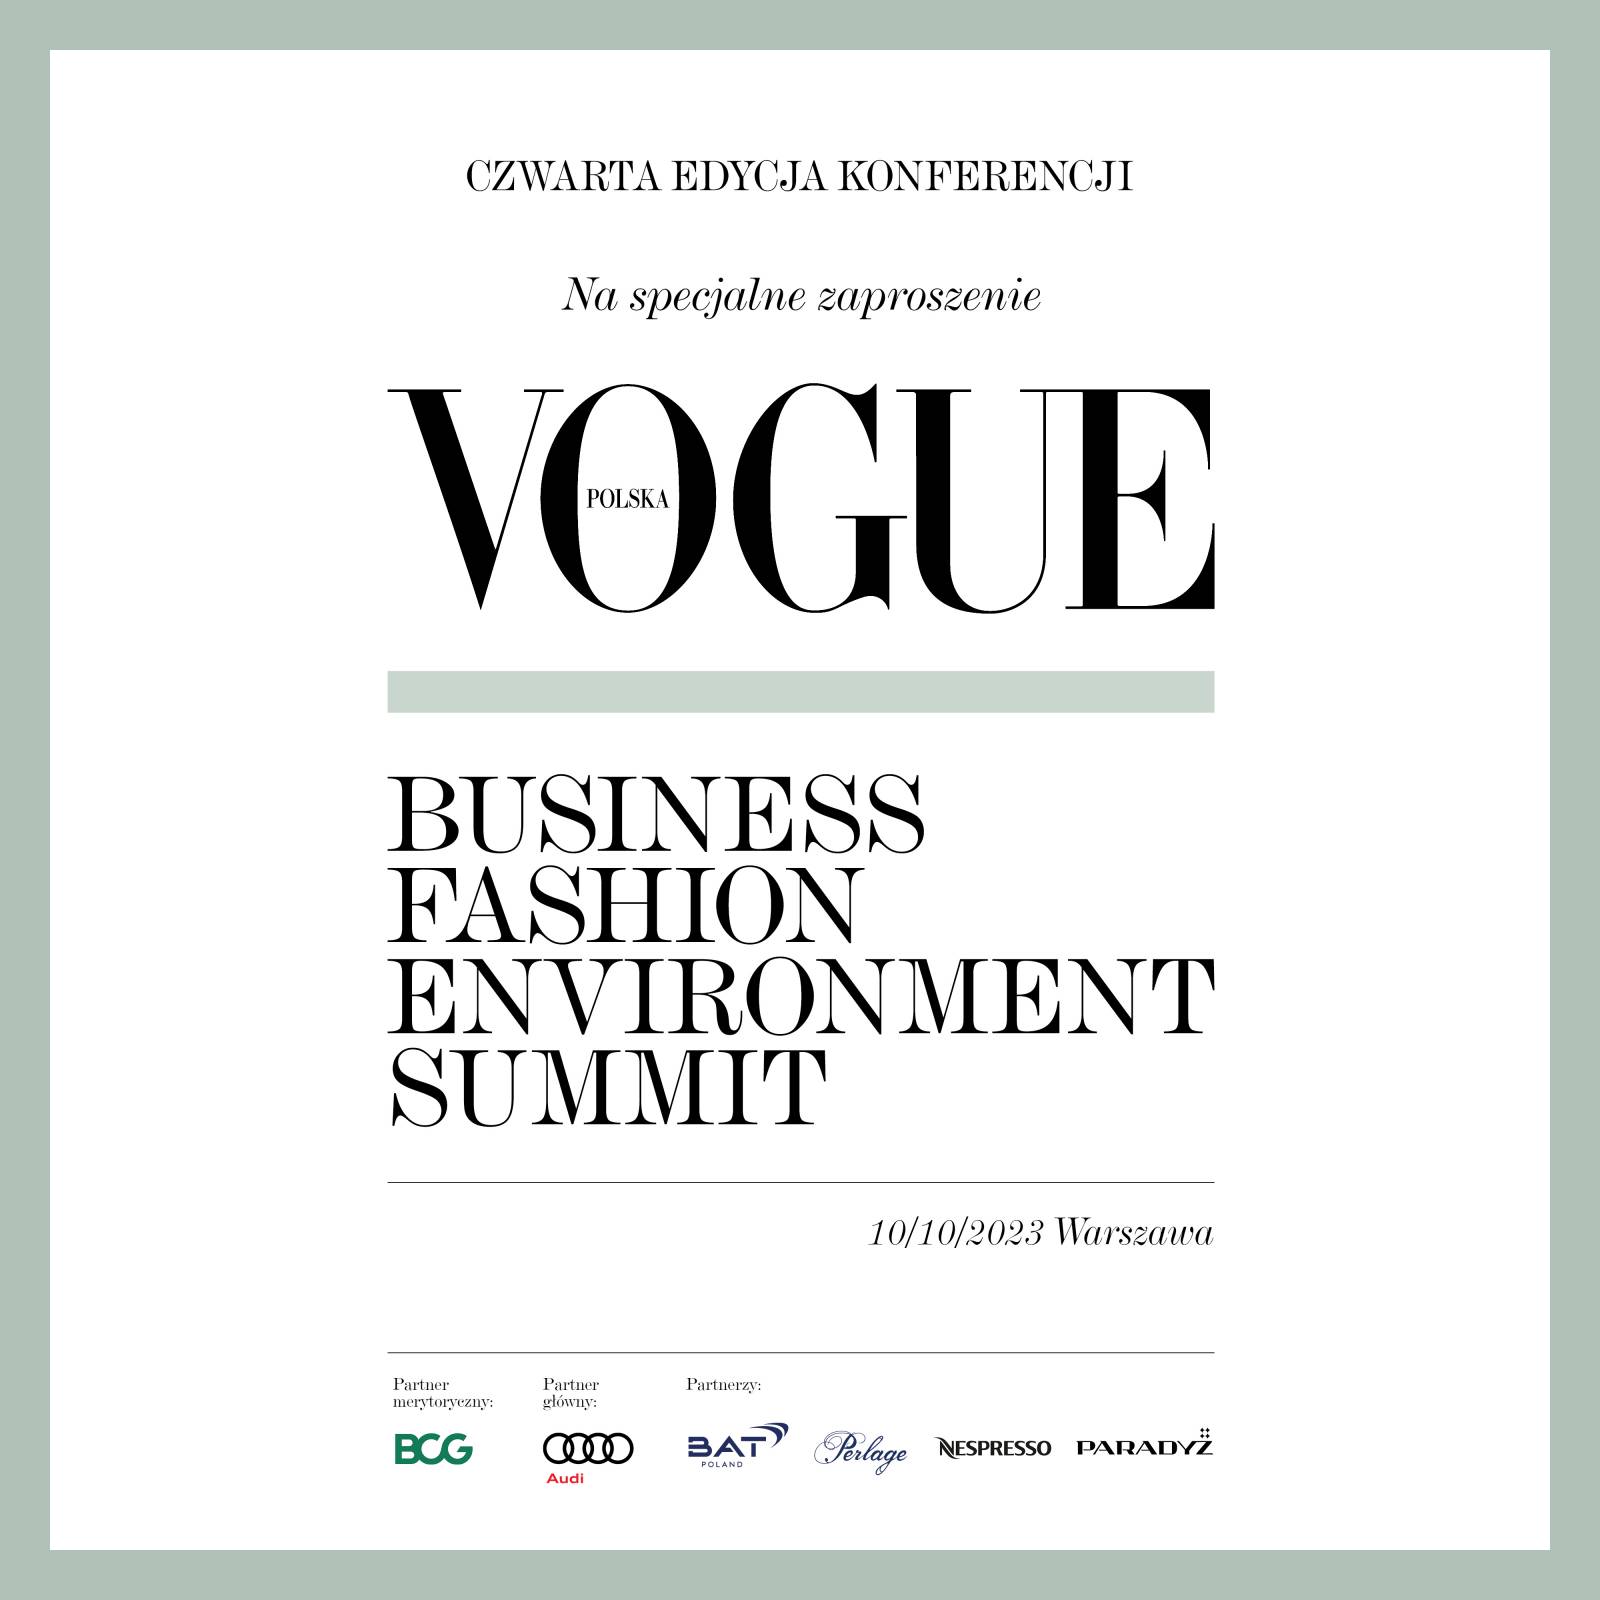 Czwarta edycja konferencji Business Fashion Environment Summit